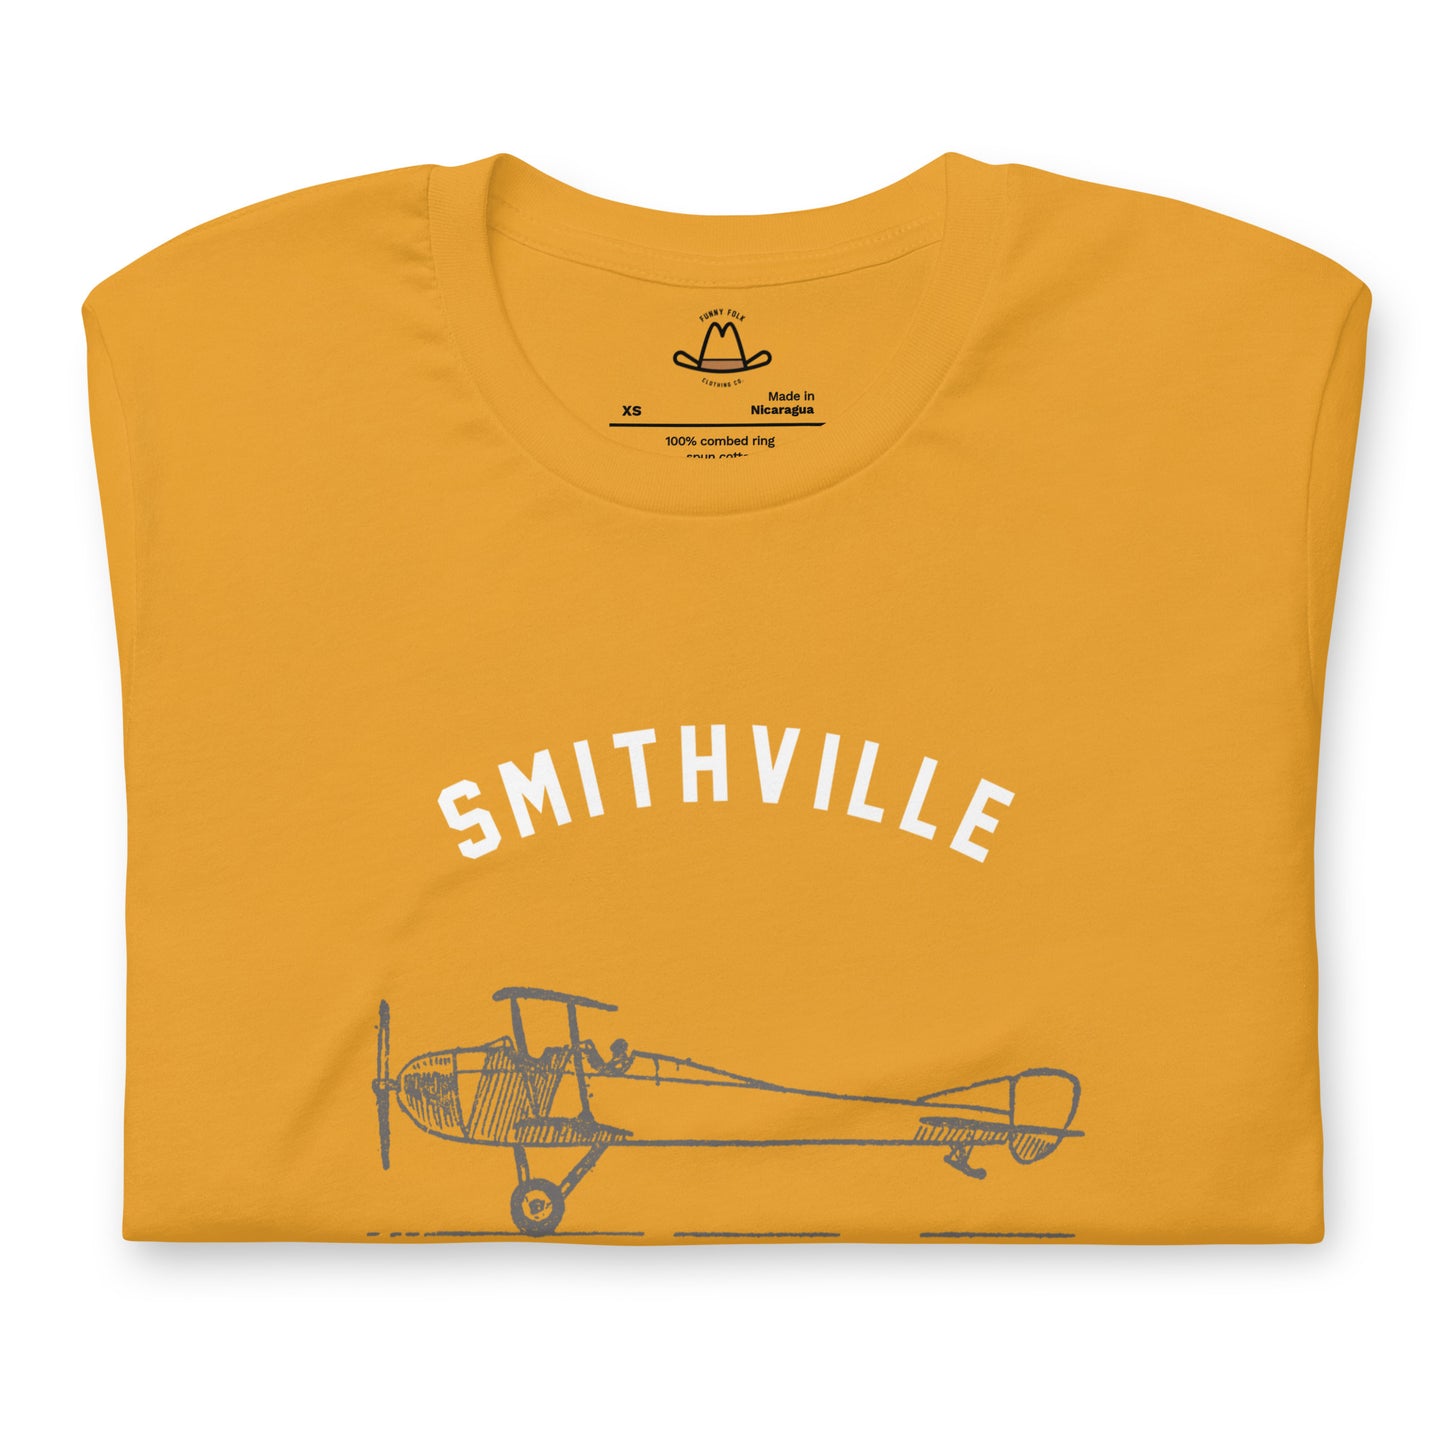 Smithville Airplane Original Tee